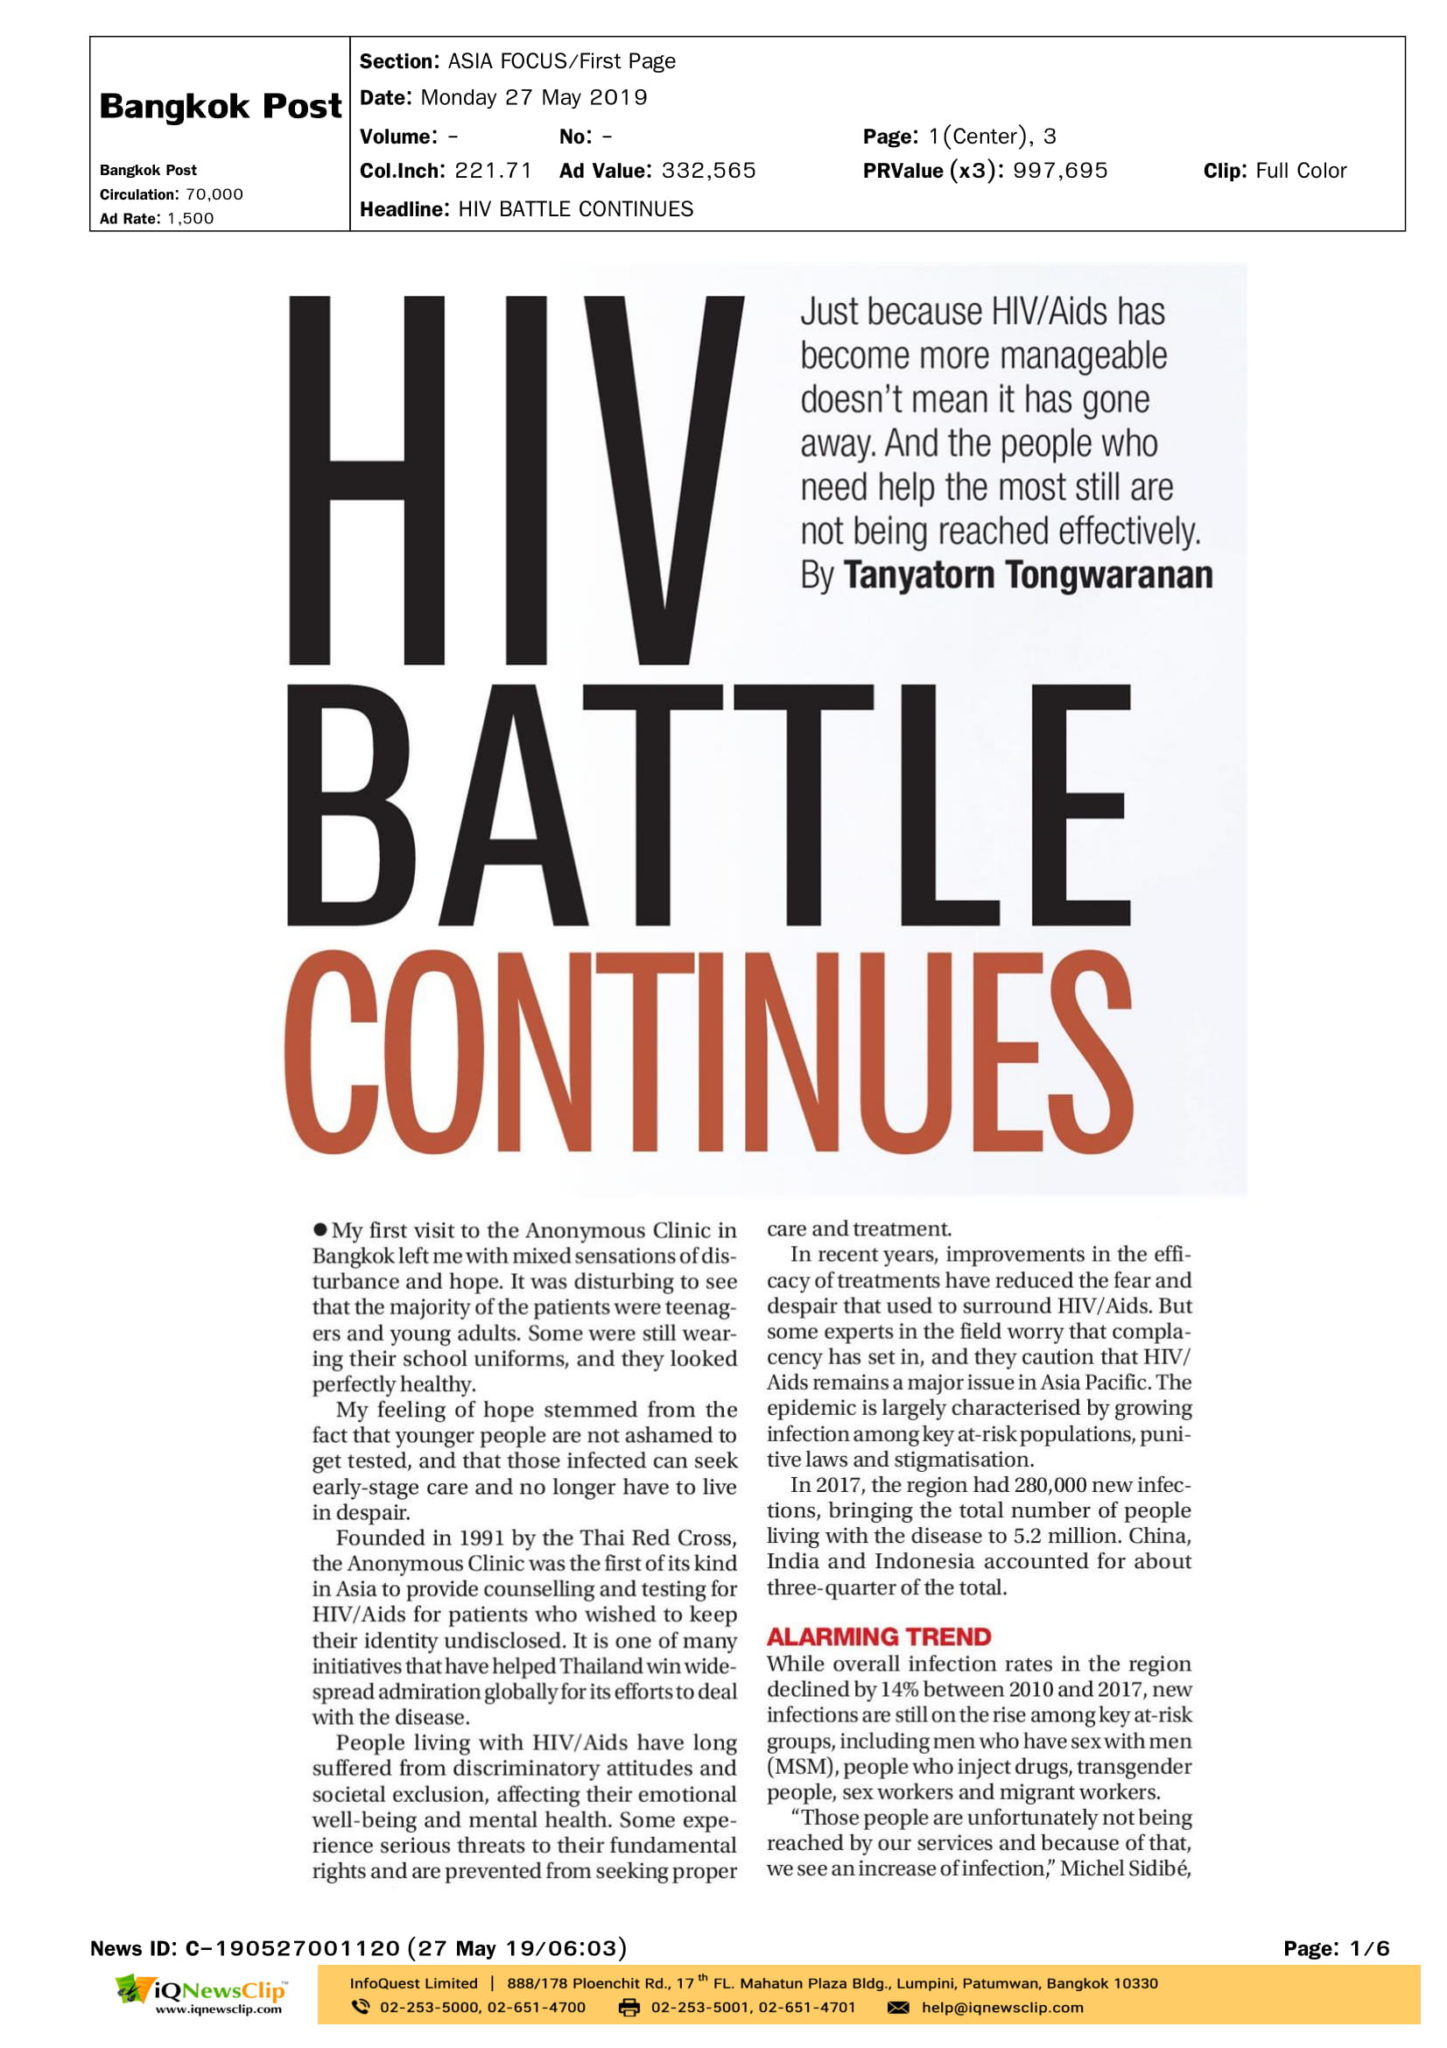 HIV BATTLE CONTINUES